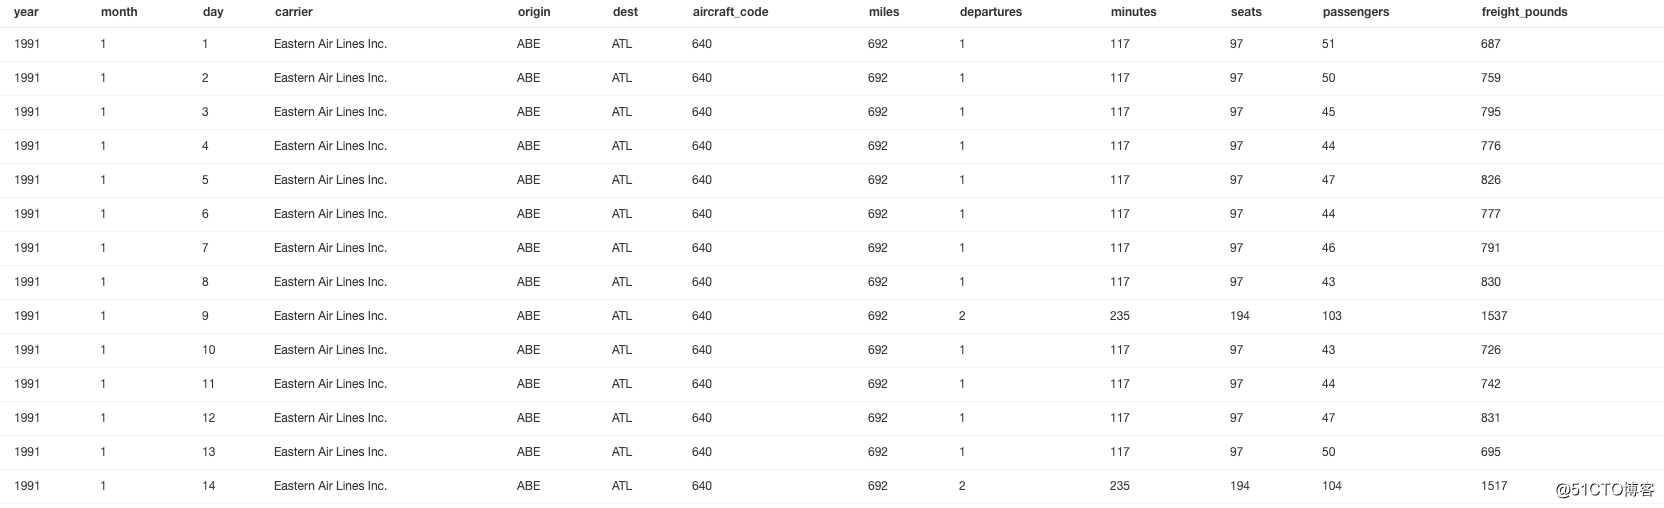 【AWS征文】[数据仓库]Redshift 动手实验---分析美联航airline数据